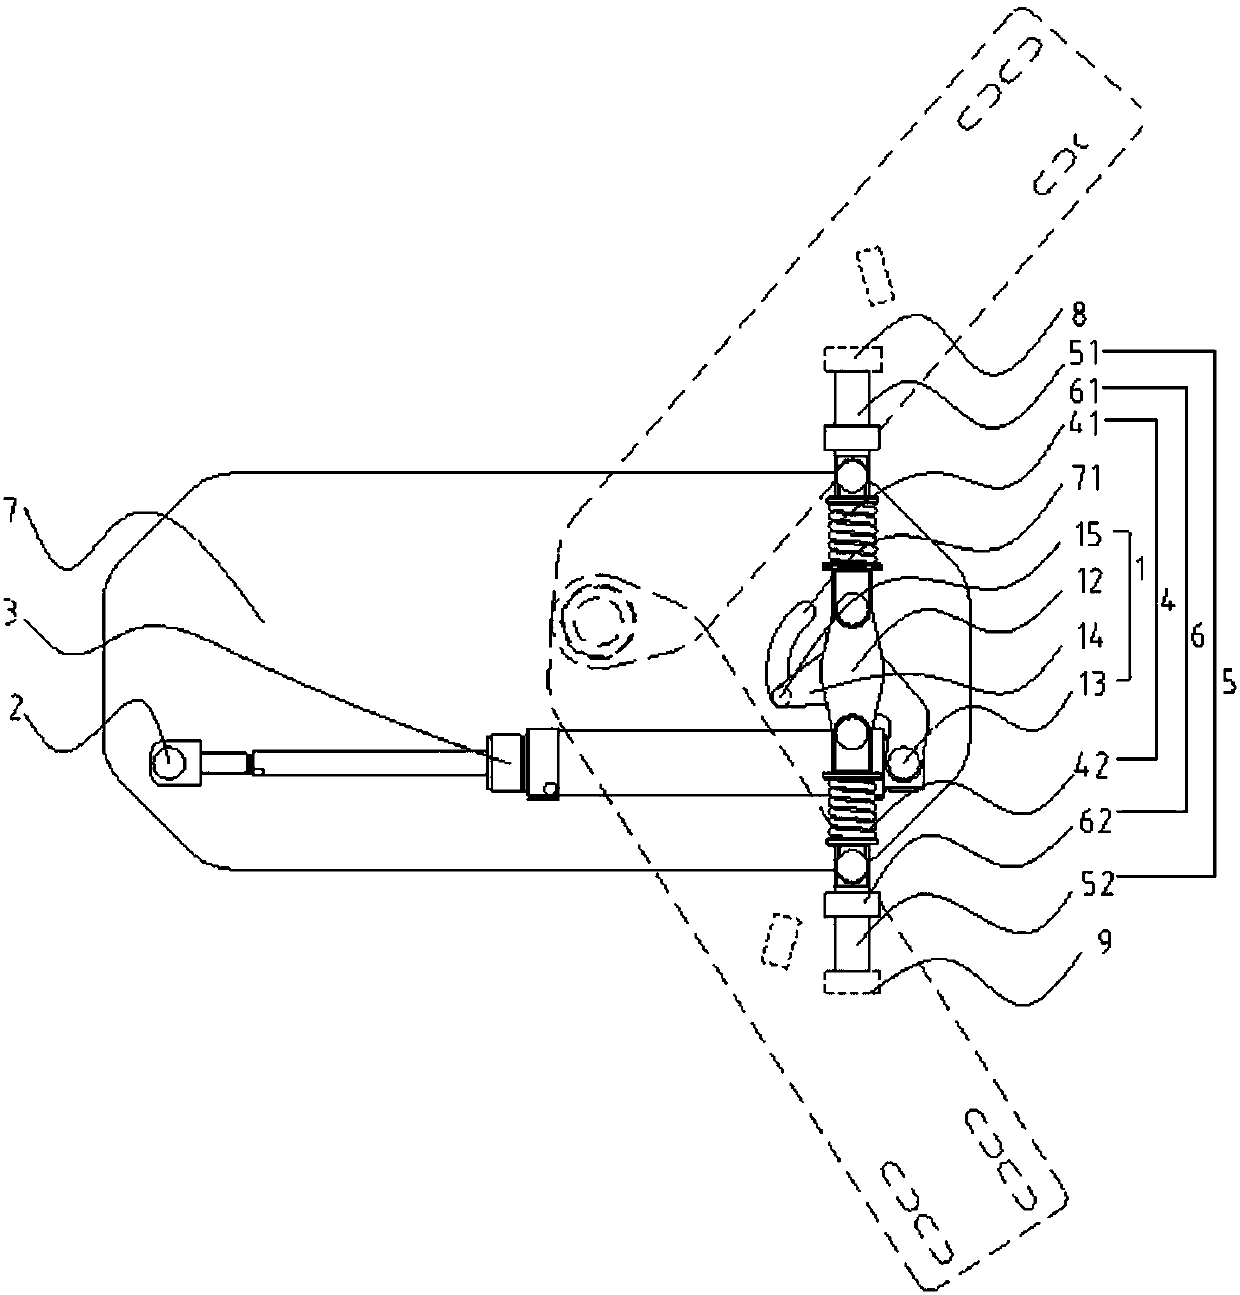 Railway vehicle fairing, railway vehicle opening-closing mechanism and self-locking mechanism